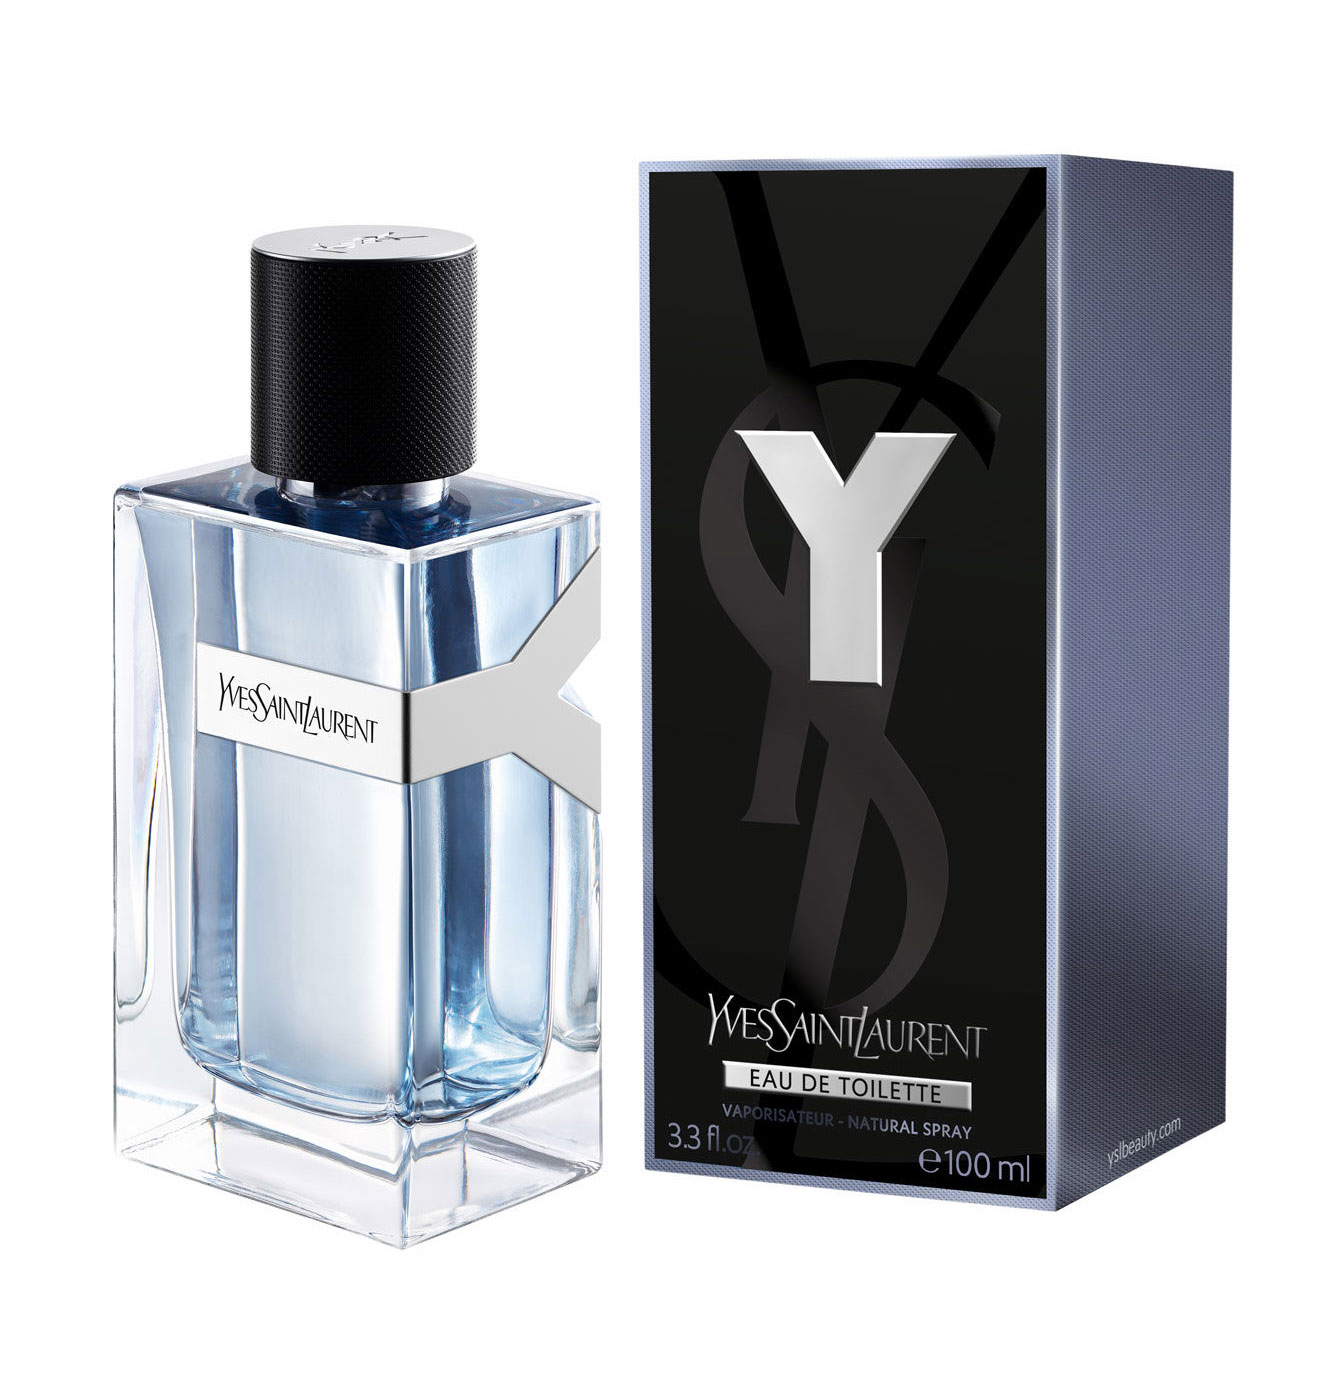 Yves Saint Laurent Y Yves Saint Laurent cologne - a new fragrance for